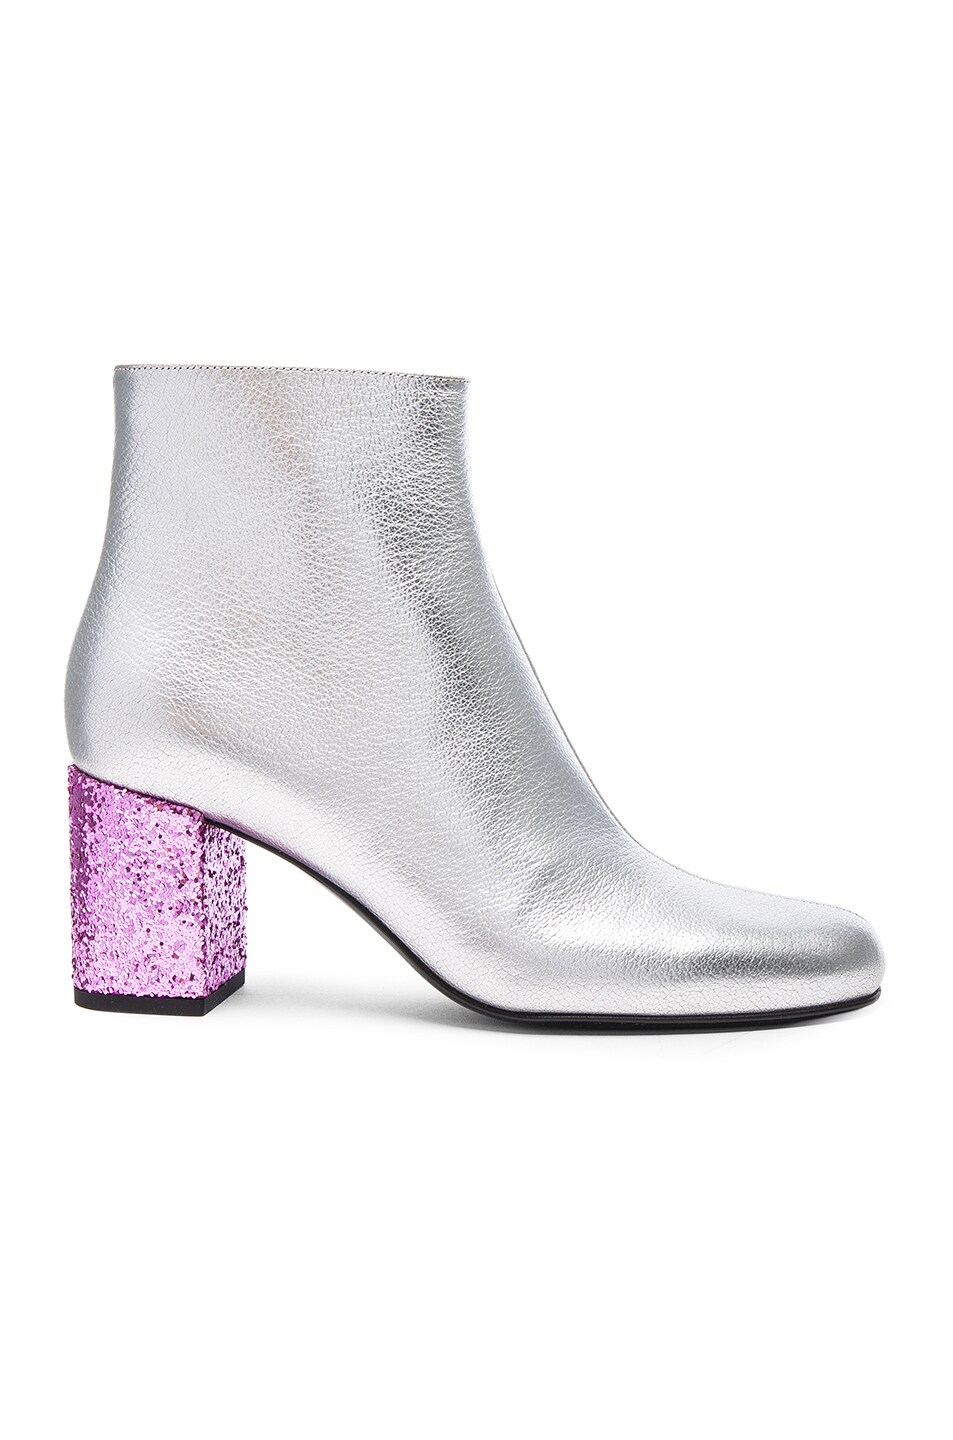 Image 1 of Saint Laurent Metallic Leather & Glitter Boots in Platinum & Vegas Pink